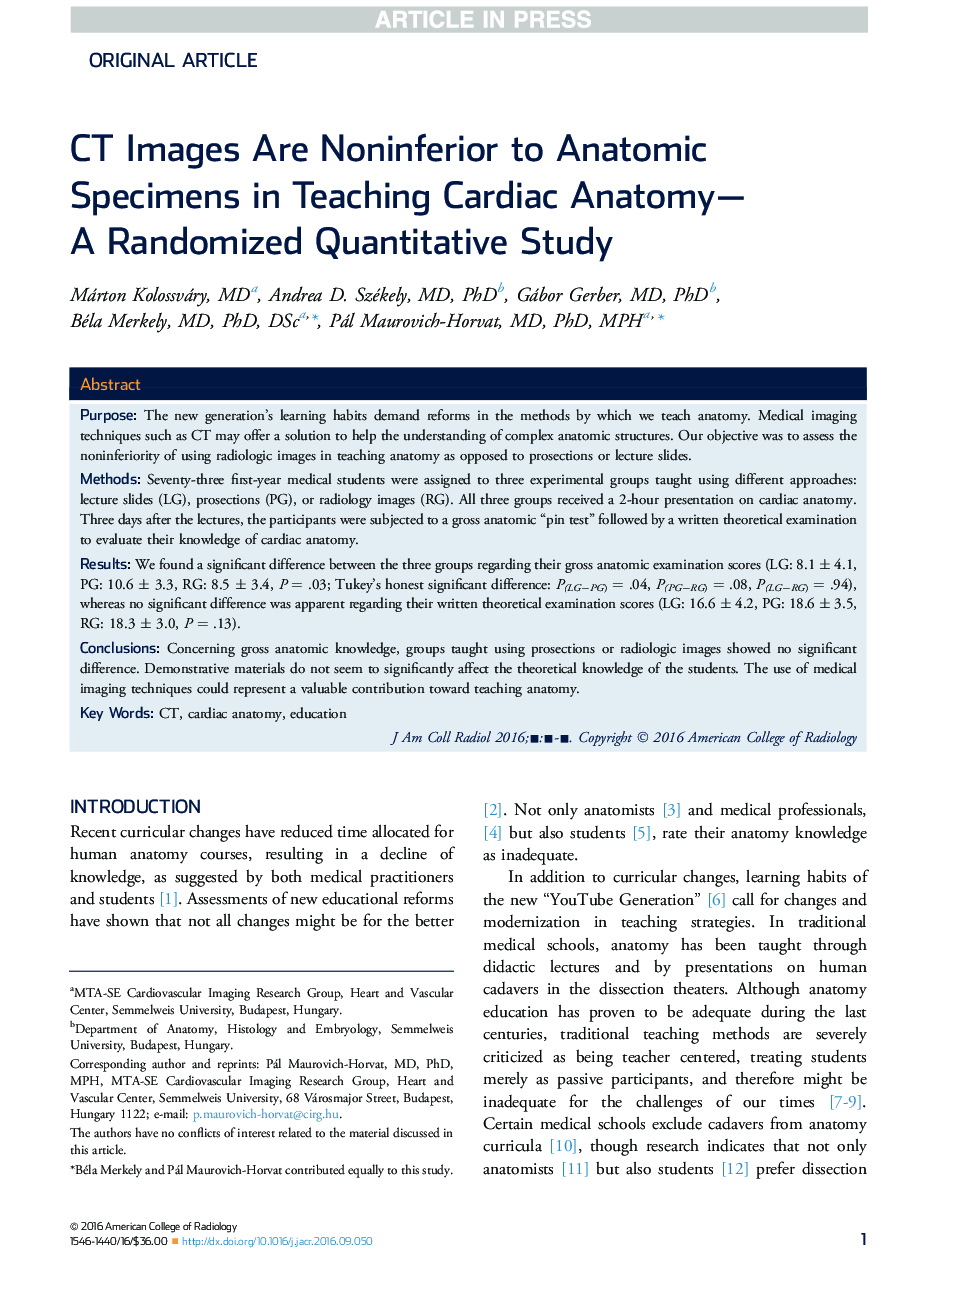 CT Images Are Noninferior to Anatomic Specimens in Teaching Cardiac Anatomy-A Randomized Quantitative Study